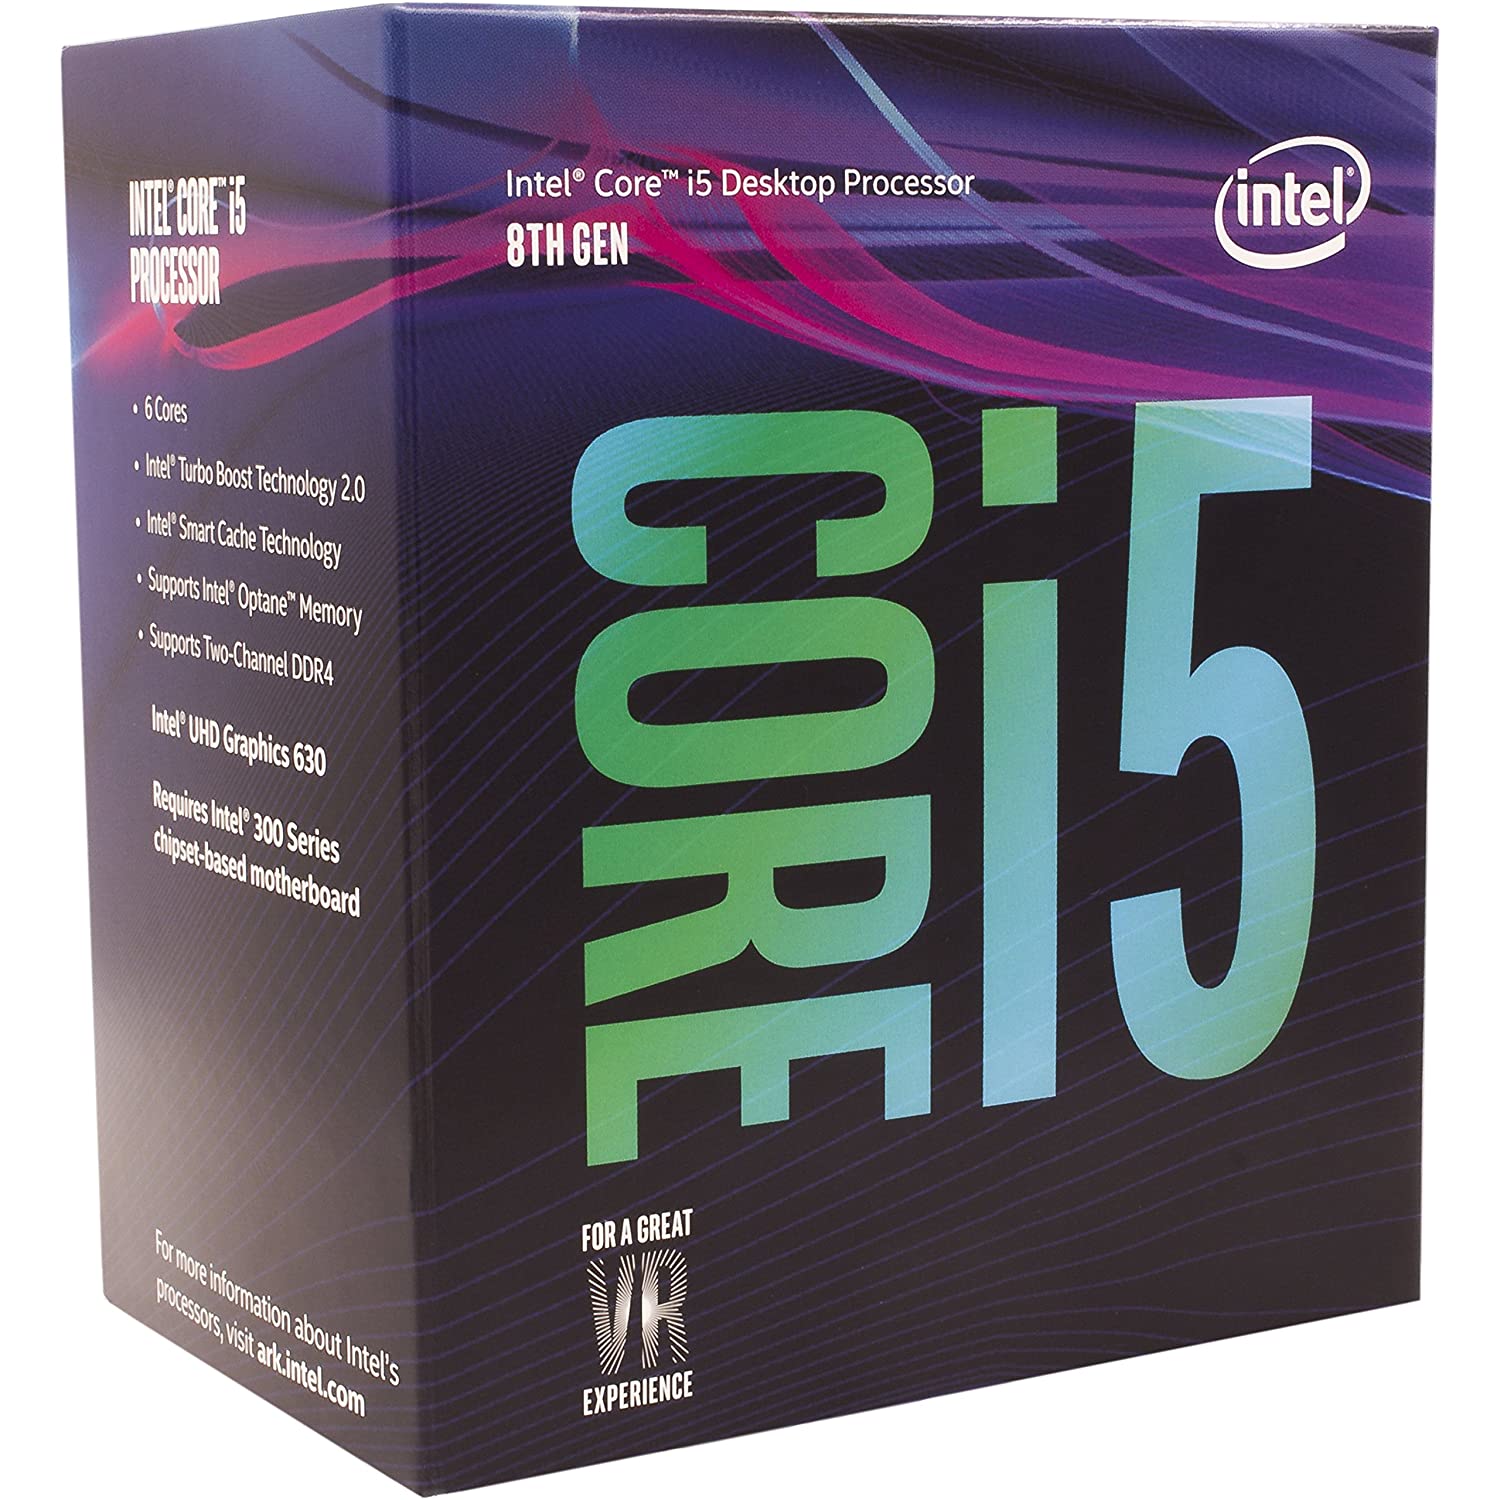 Intel Core i5 Processor - Think PC